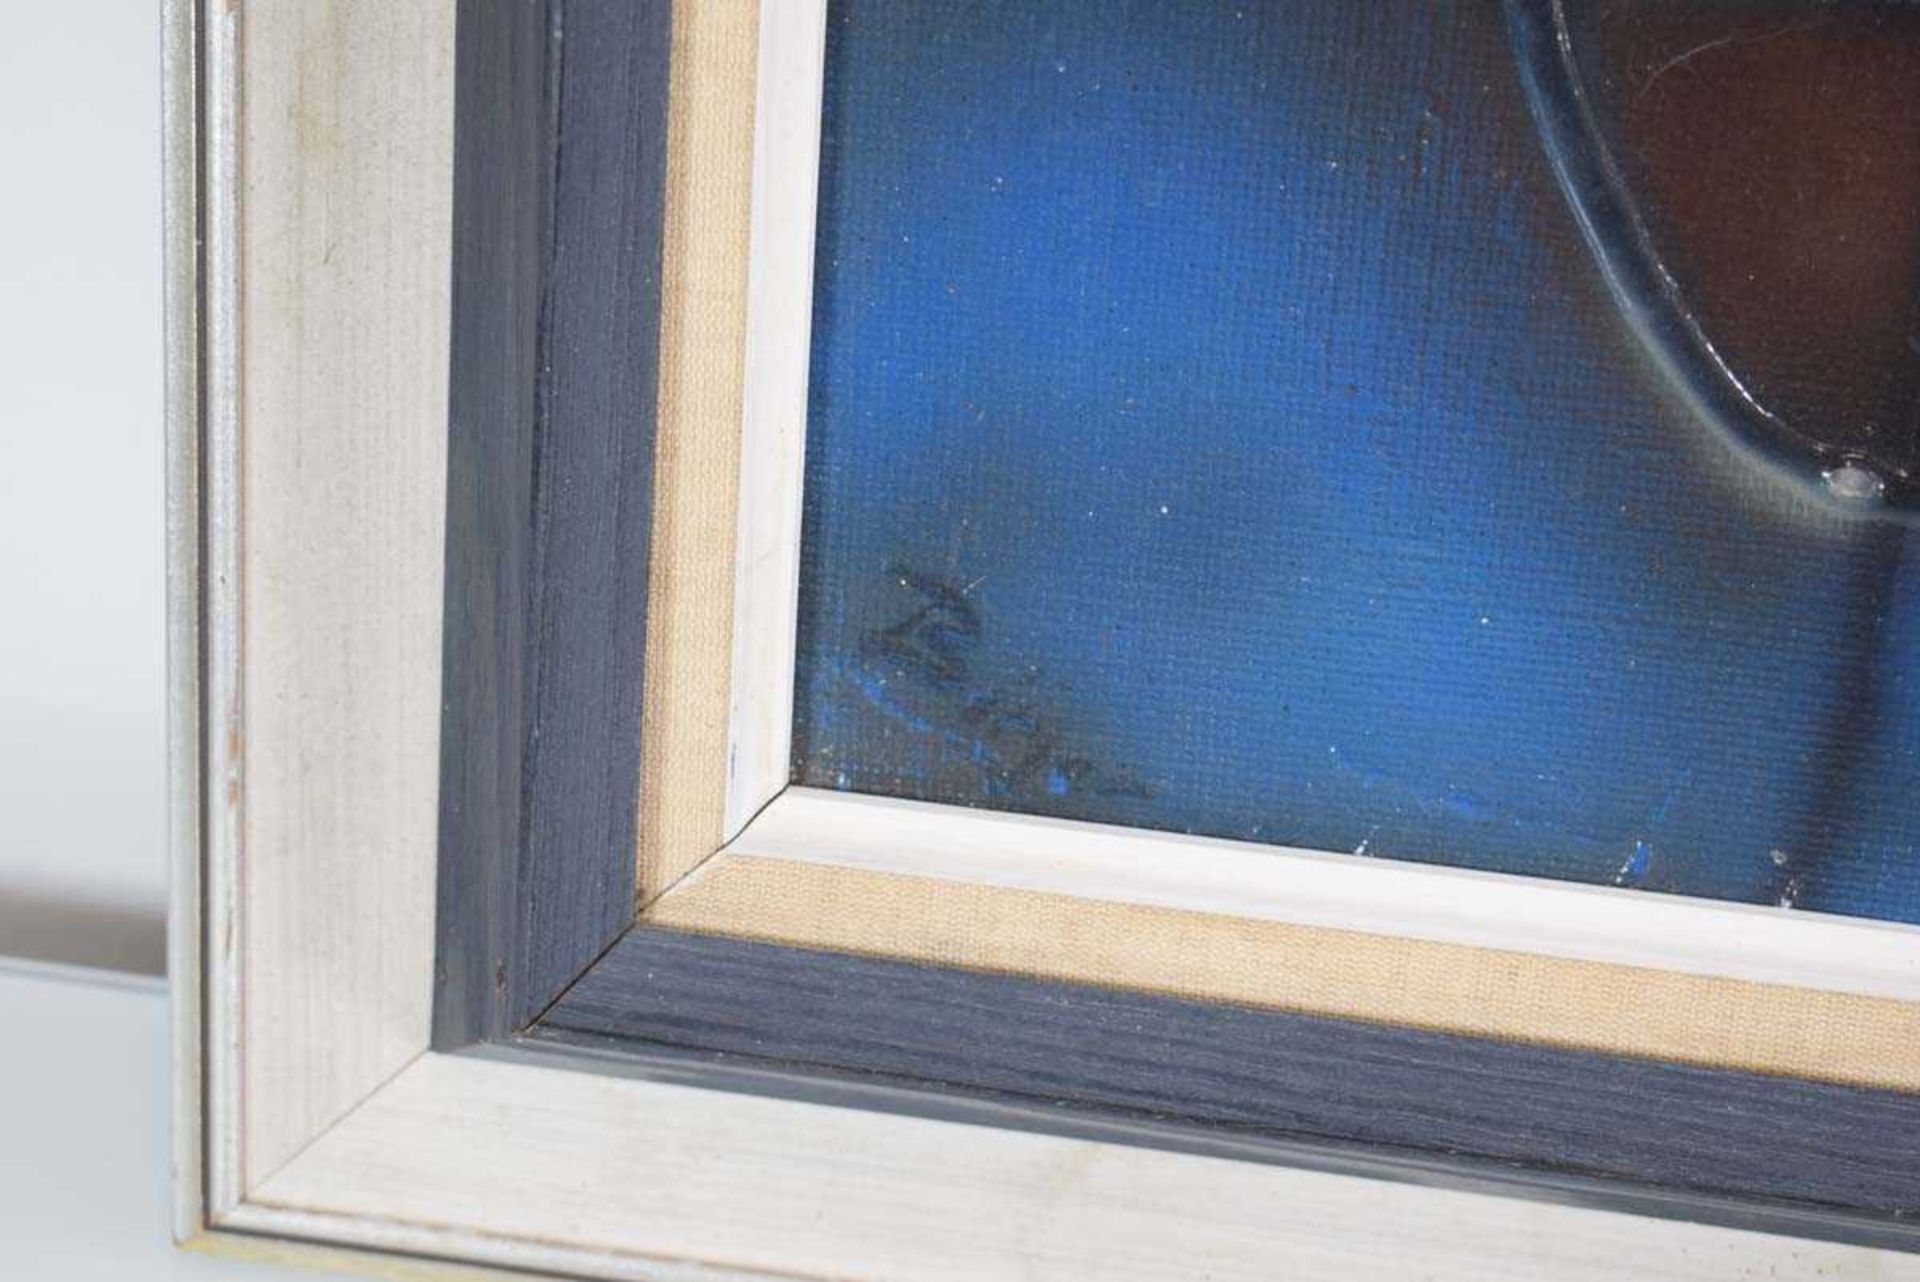 Birger Th. Hansen (b. 1940), 'Bla Drom' (Blue Dream), signed, oil on canvas, image 32 x 62 cm - Image 2 of 3